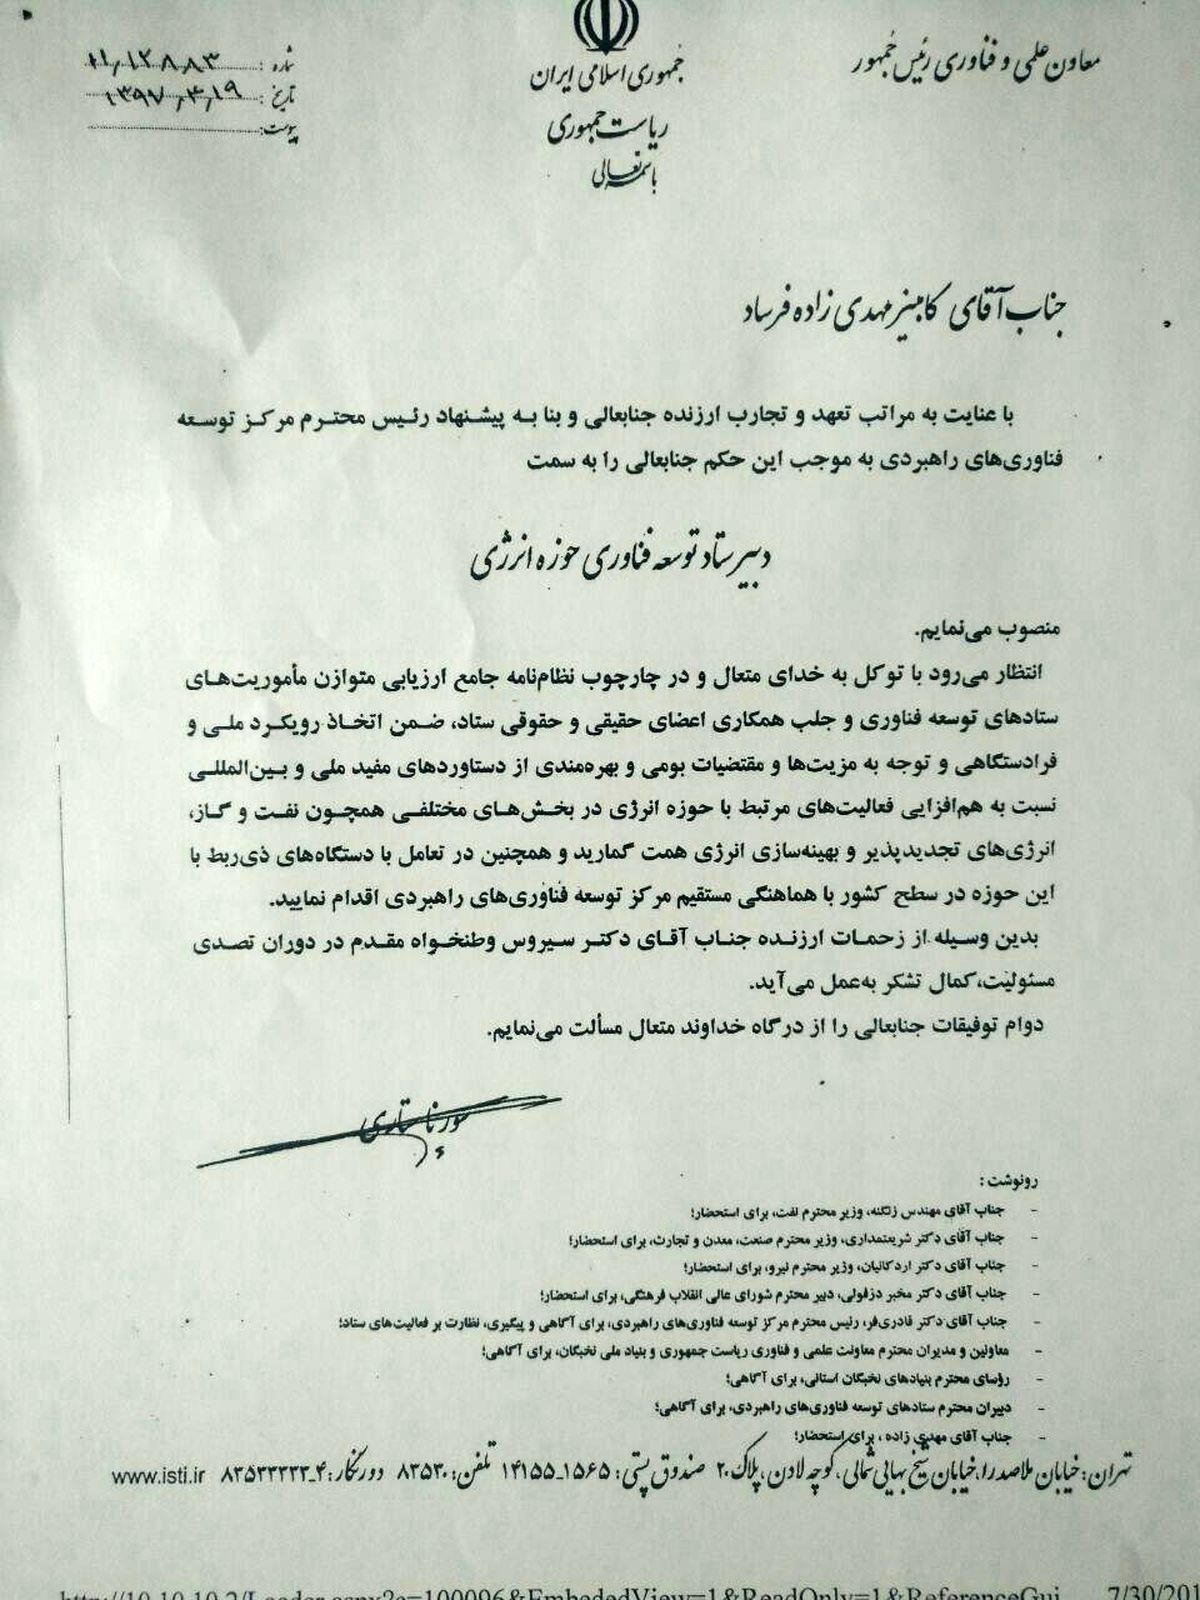 داماد حسن روحانی در دولت مسئولیت گرفت +سند